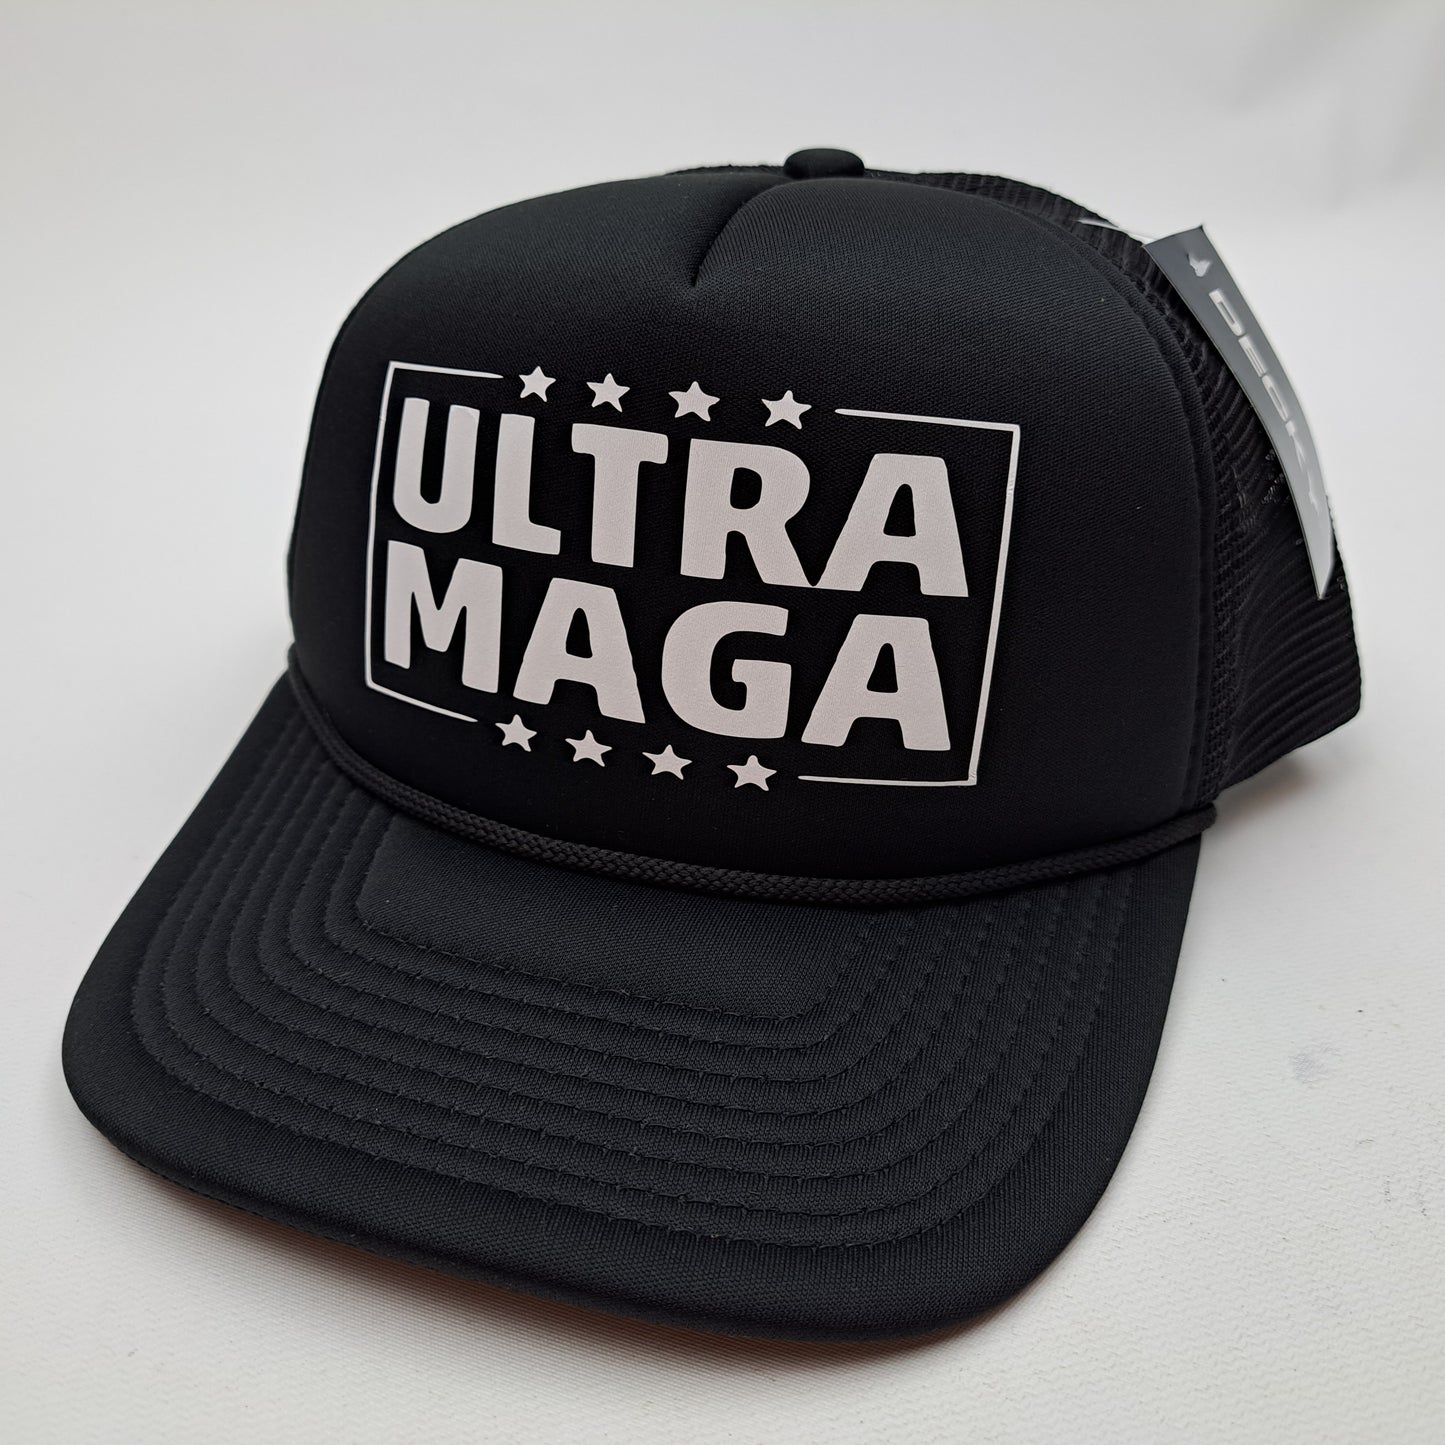 Ultra MAGA Foam Mesh Vintage Trucker Style Snapback Black